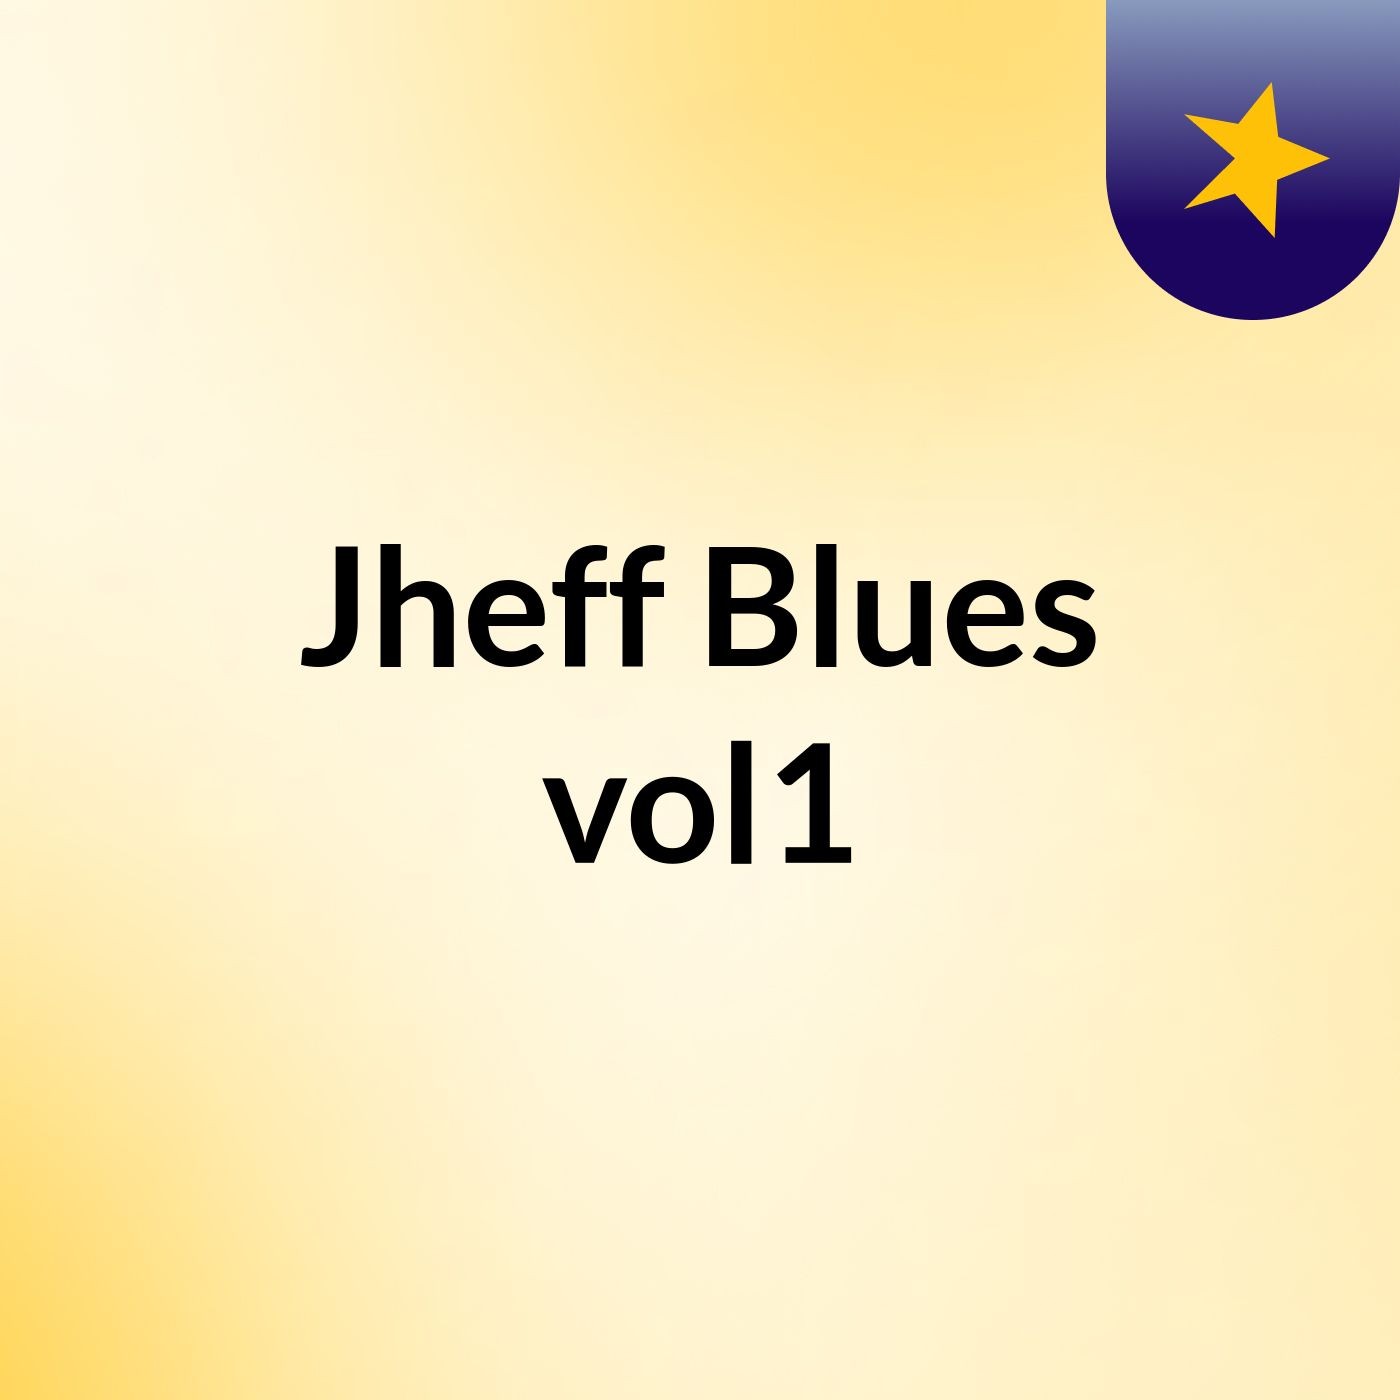 Jheff Blues vol1